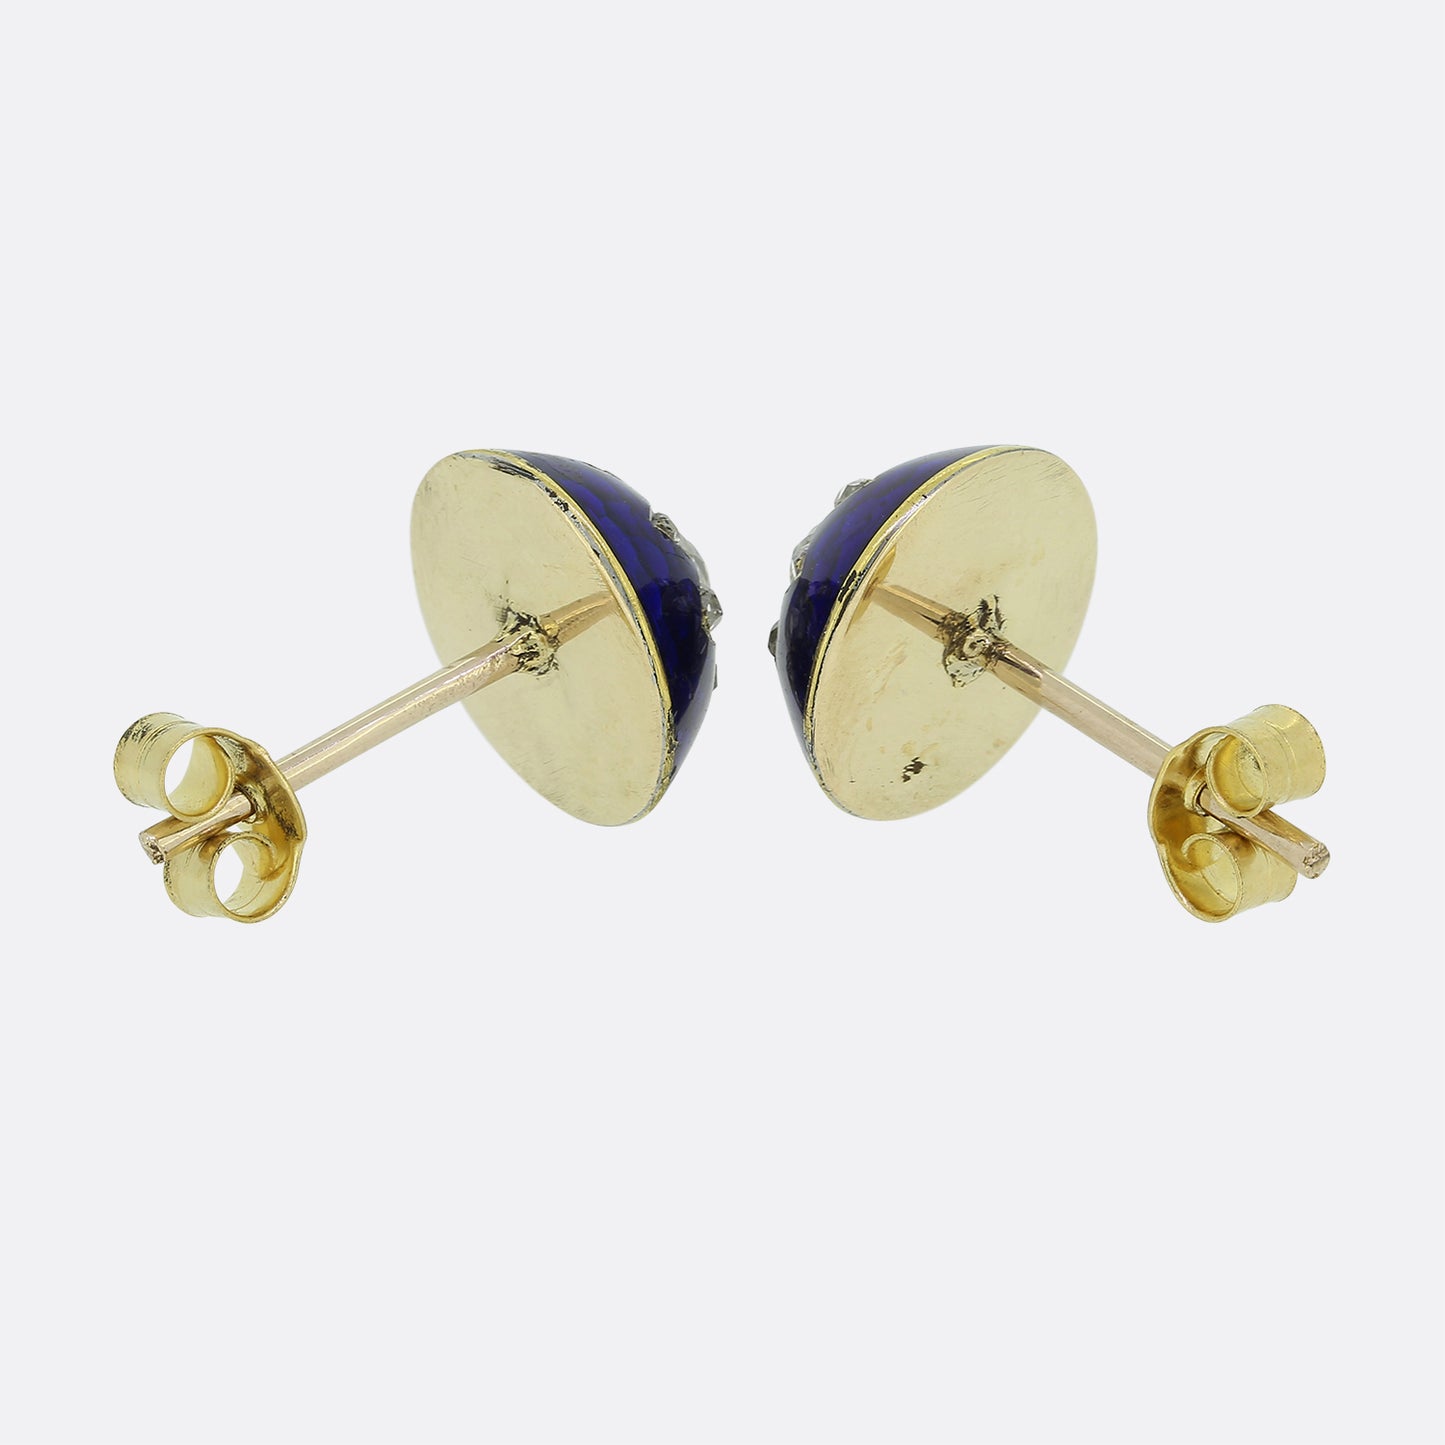 Victorian Enamel and Diamond Cluster Earrings